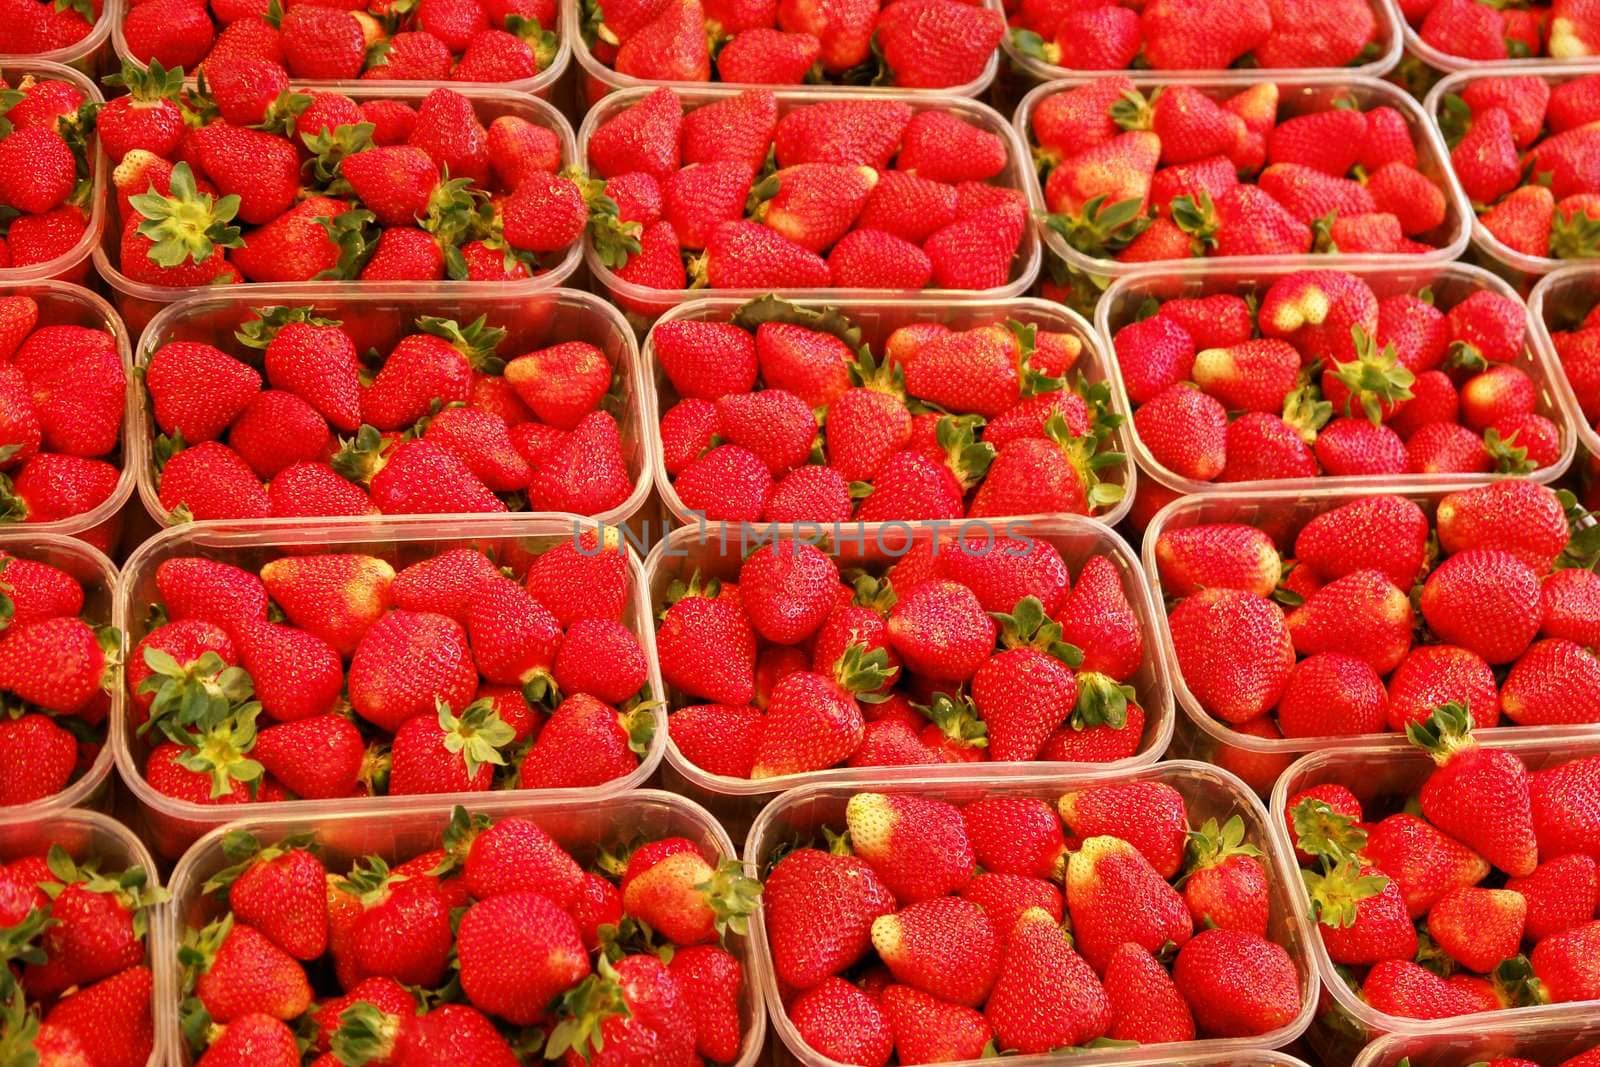 strawberries in baskets on a fresh market